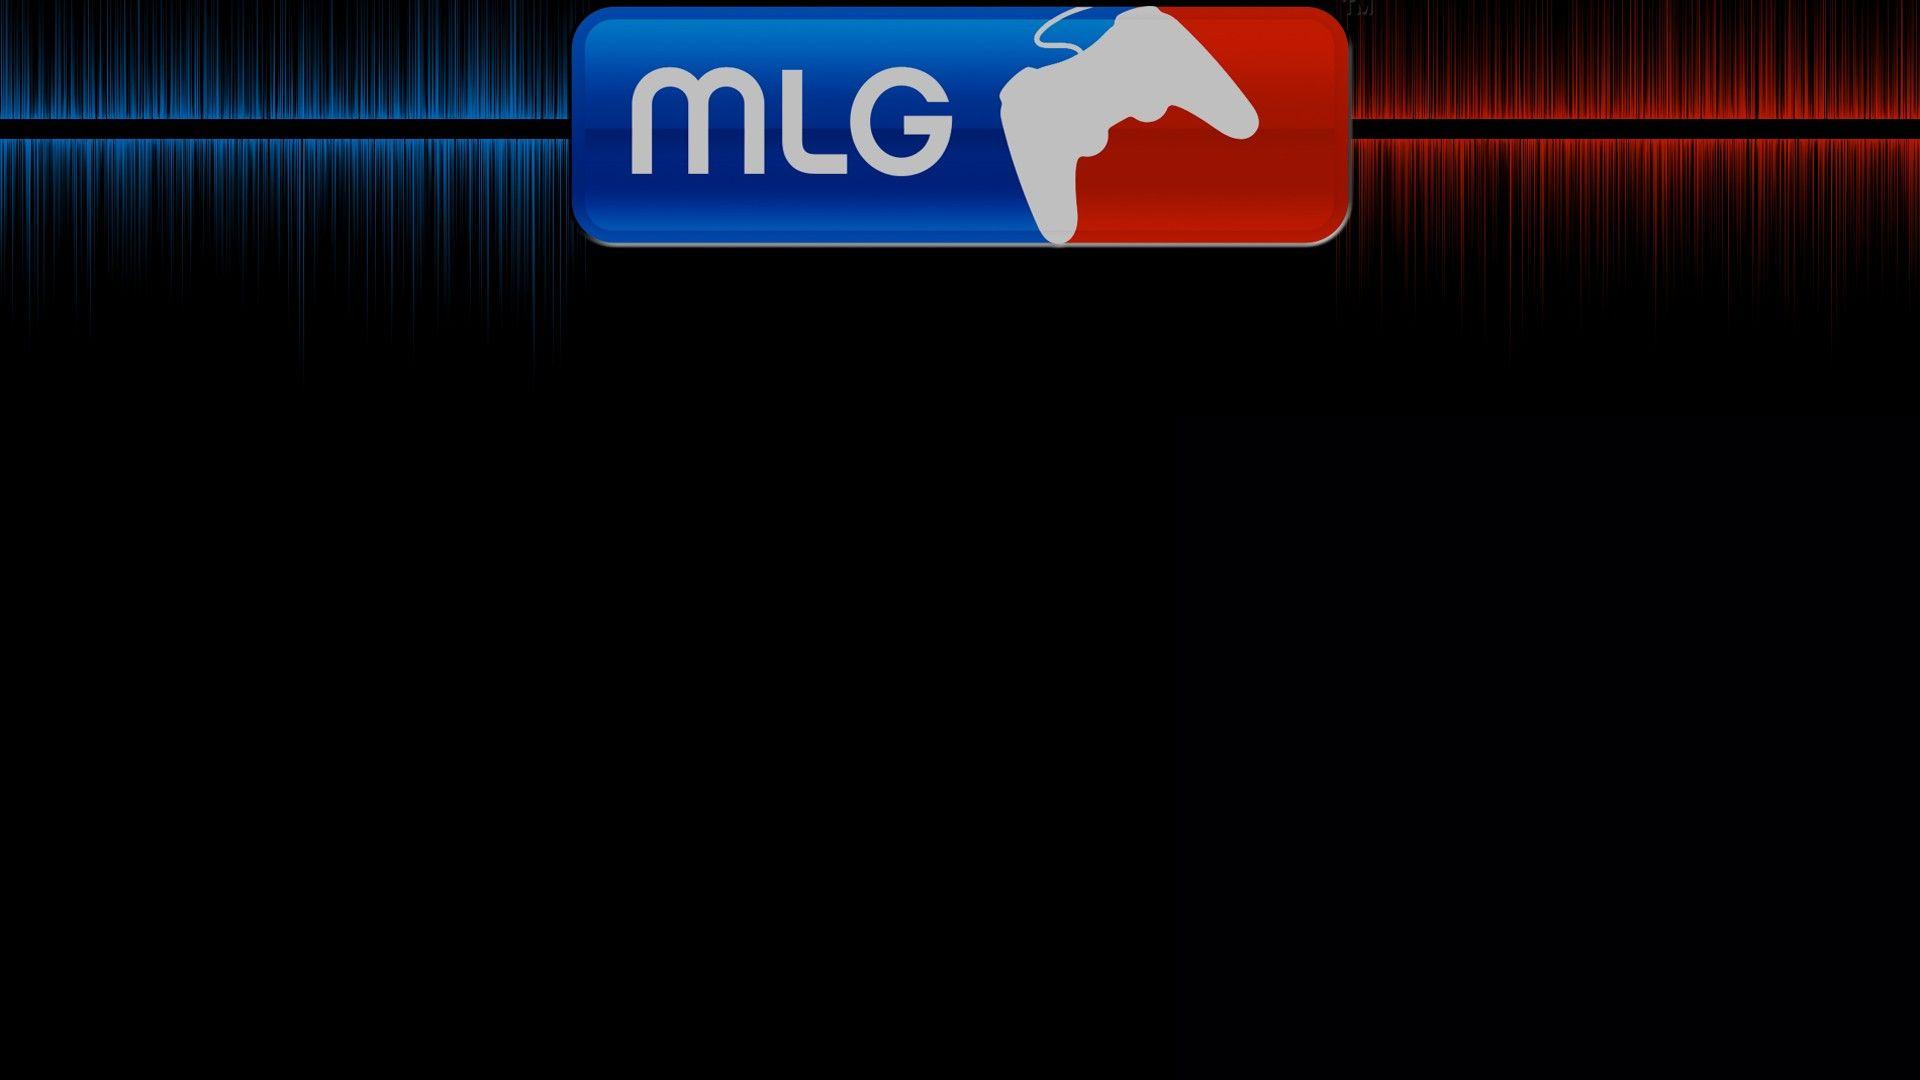 MLG wallpaperDownload free beautiful full HD background